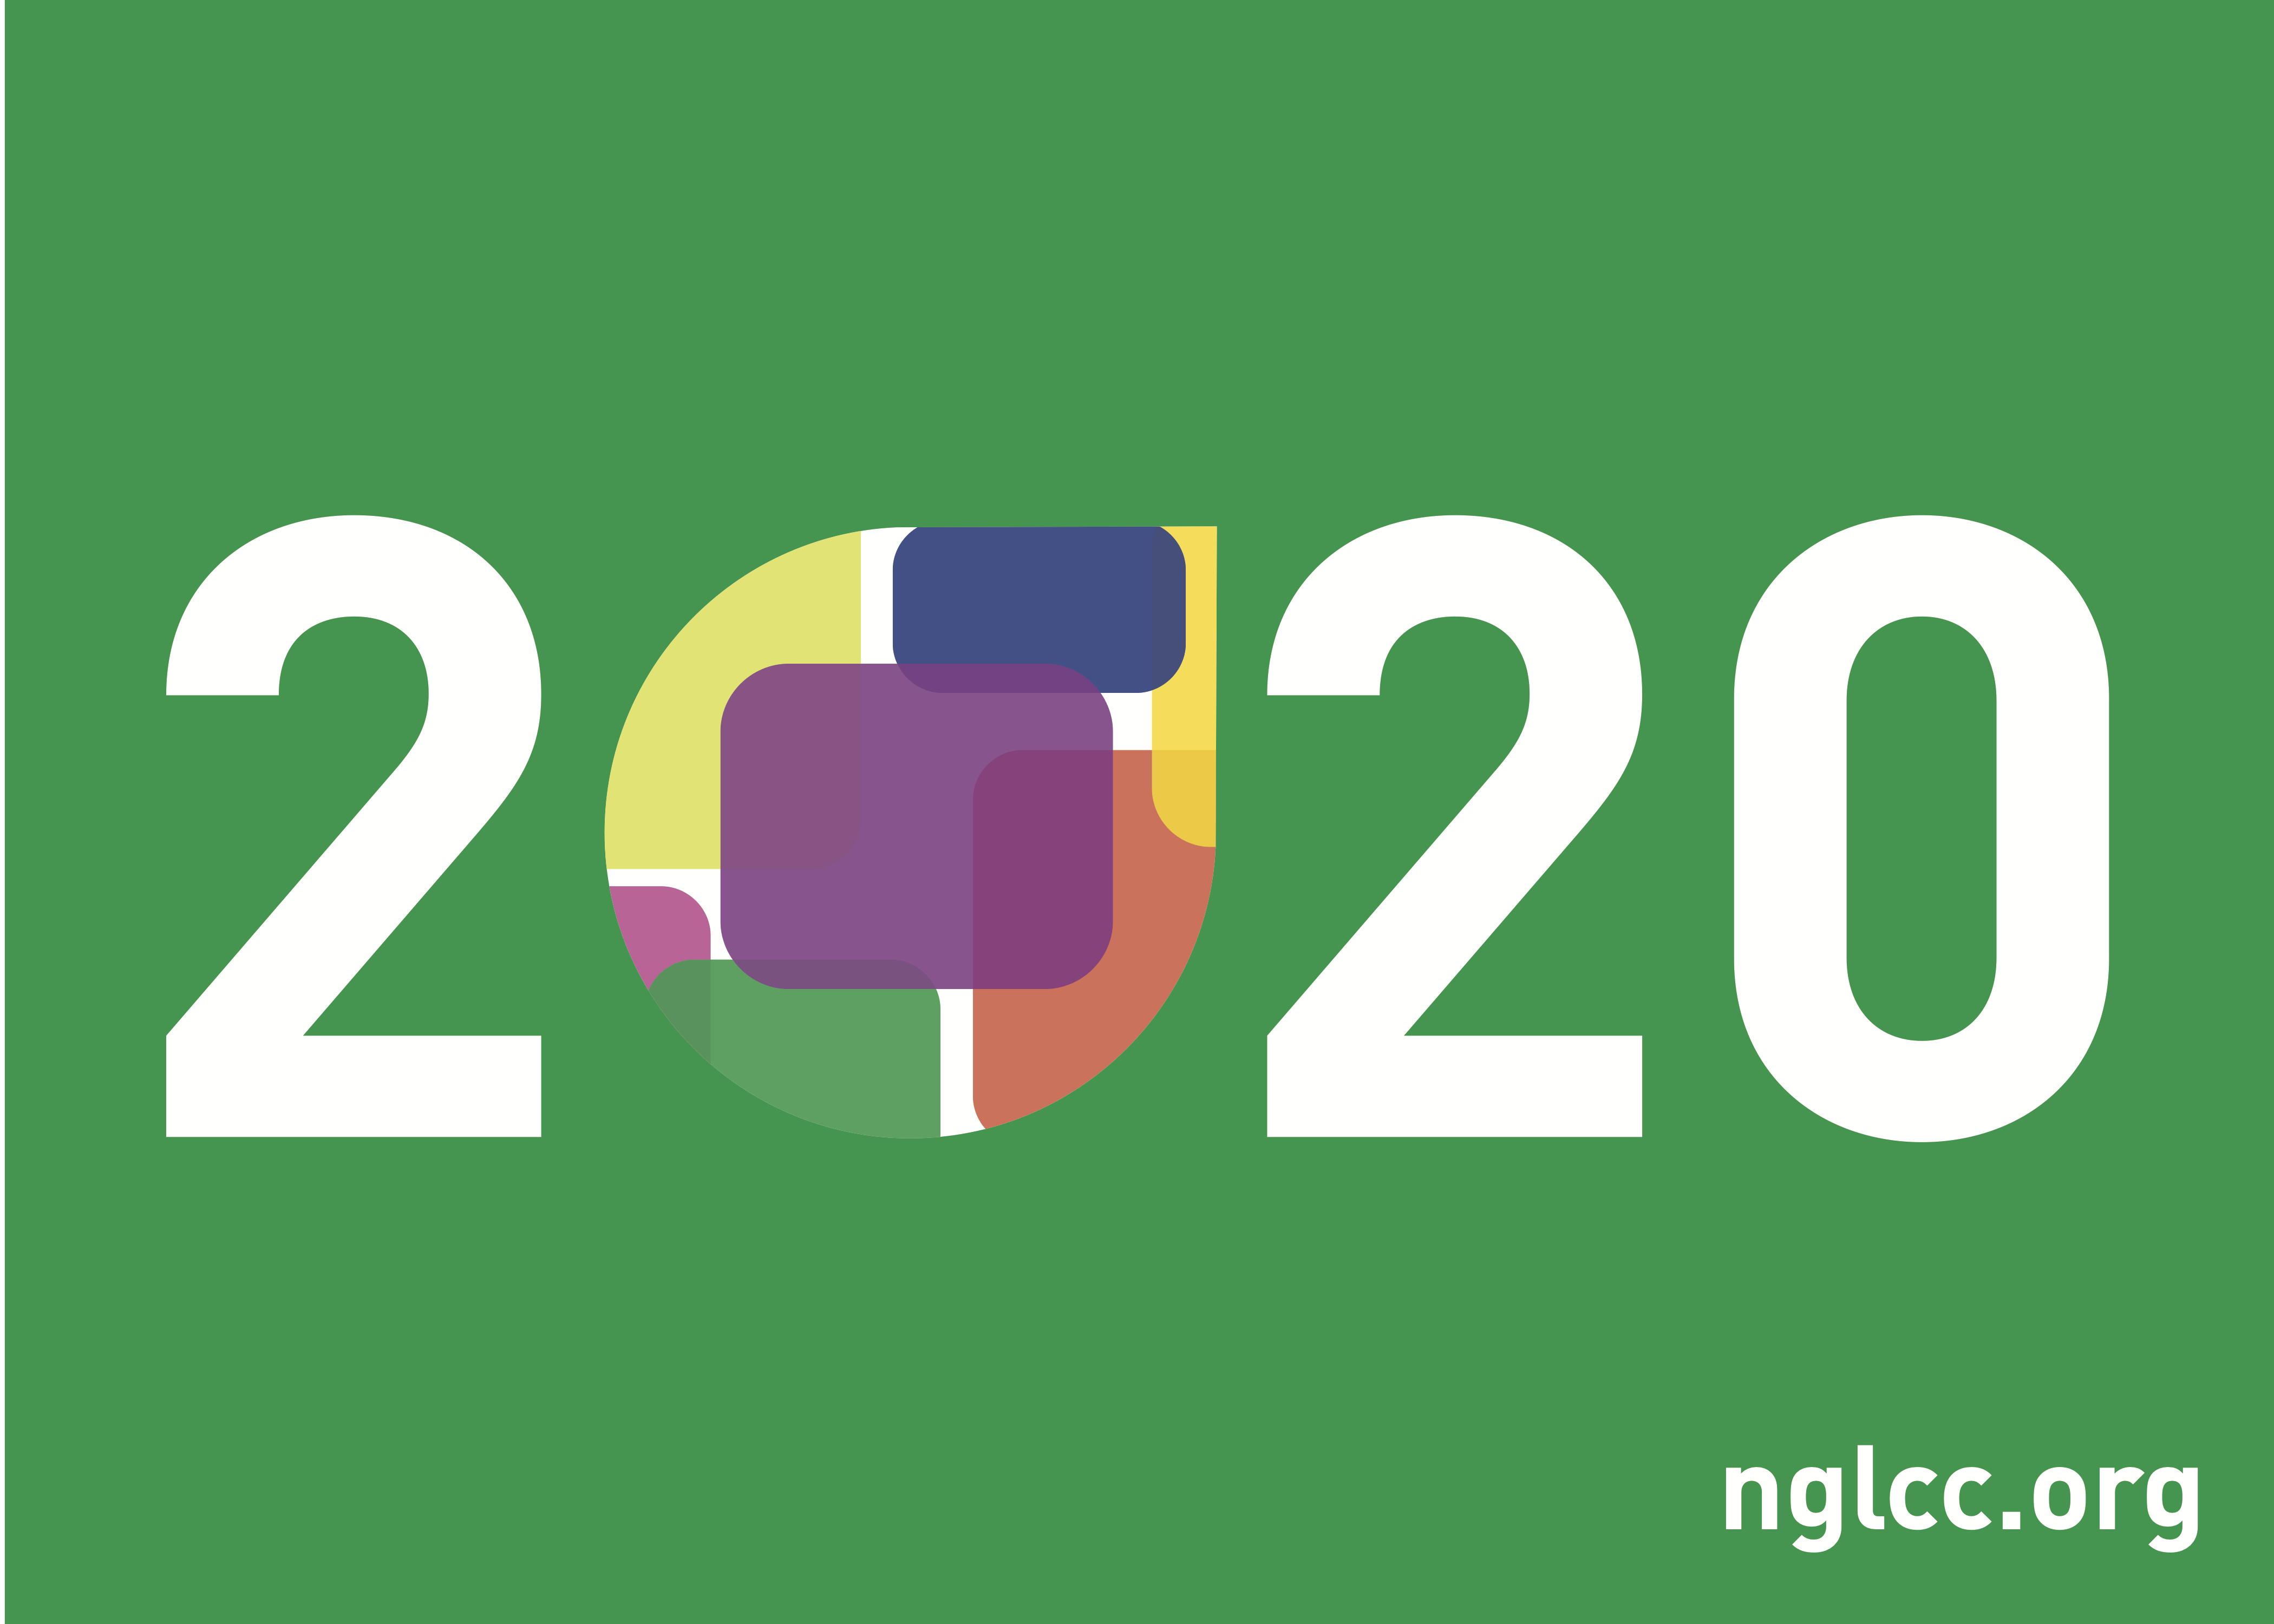 NGLCC Logo - NGLCC NGLCC International Business & Leadership Conference